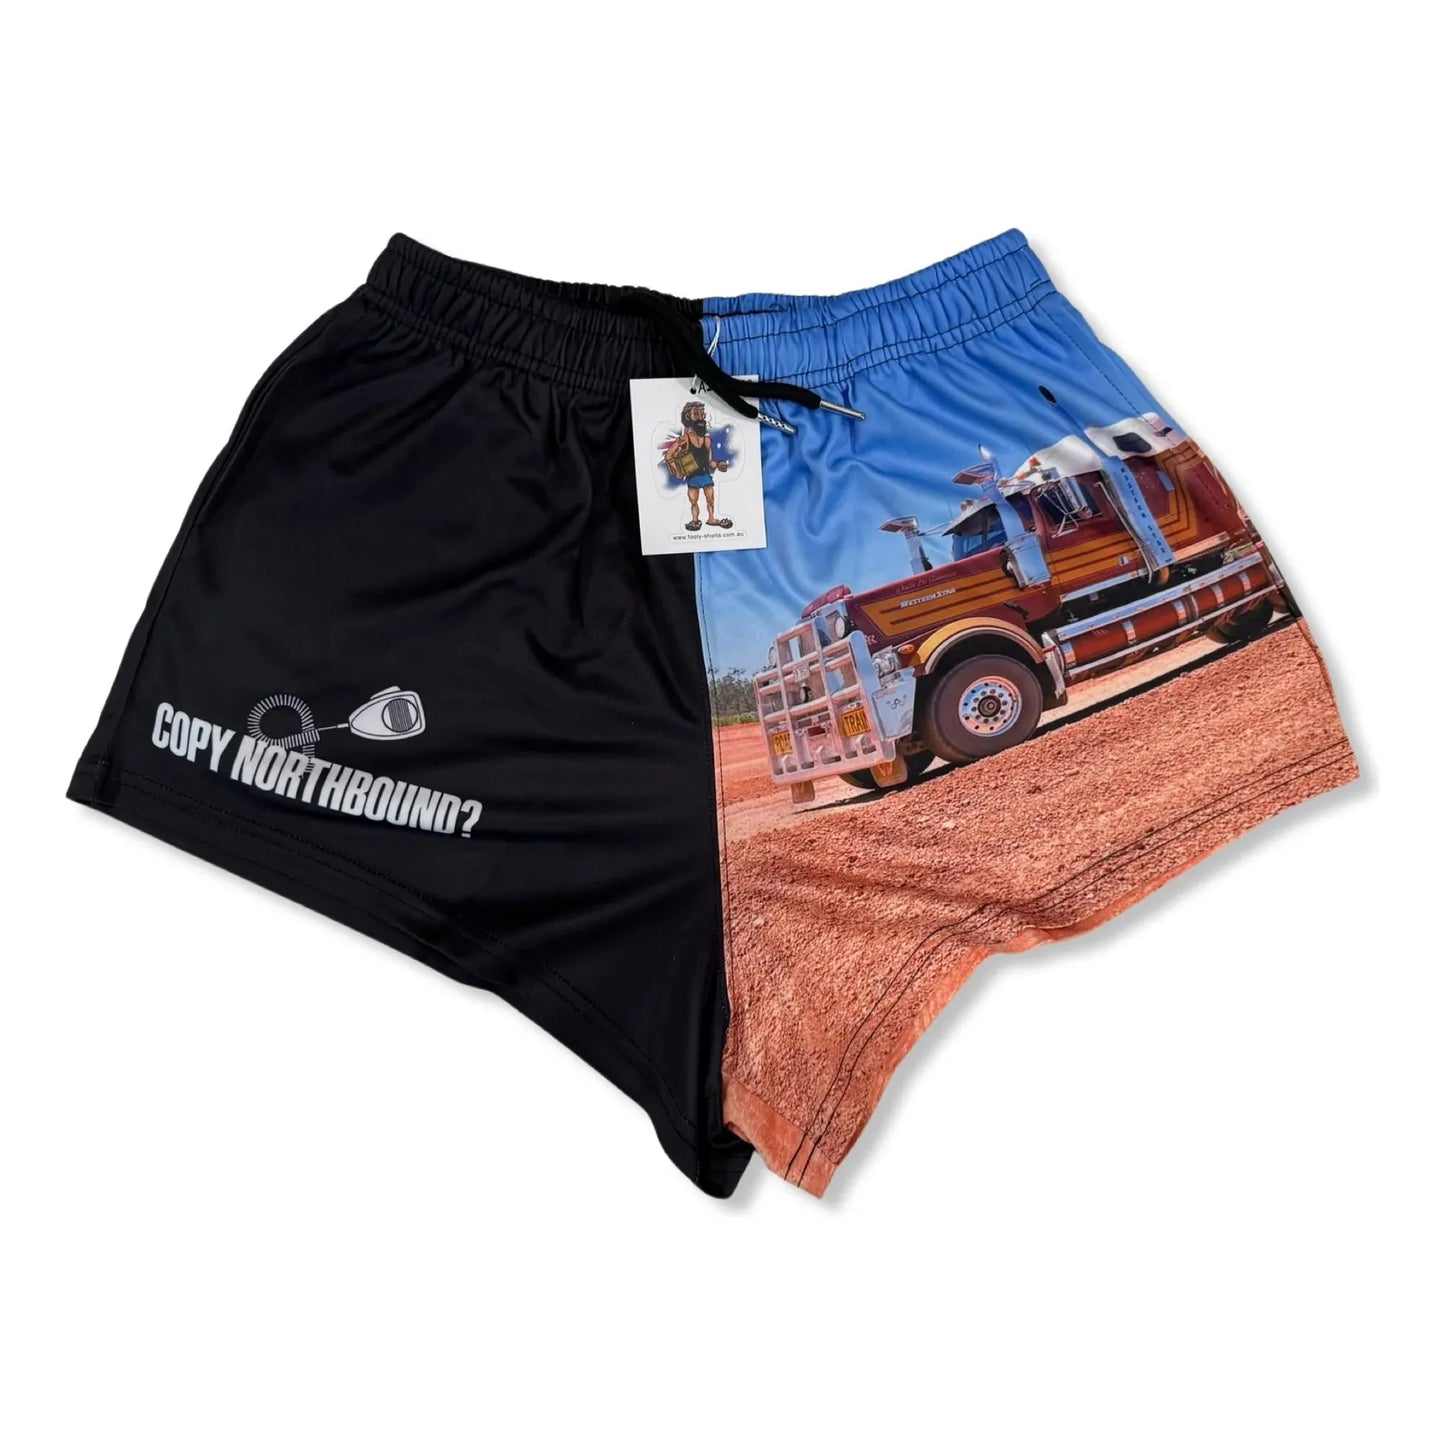 Unisex Aussie Footy Shorts Copy Northbound with Pockets